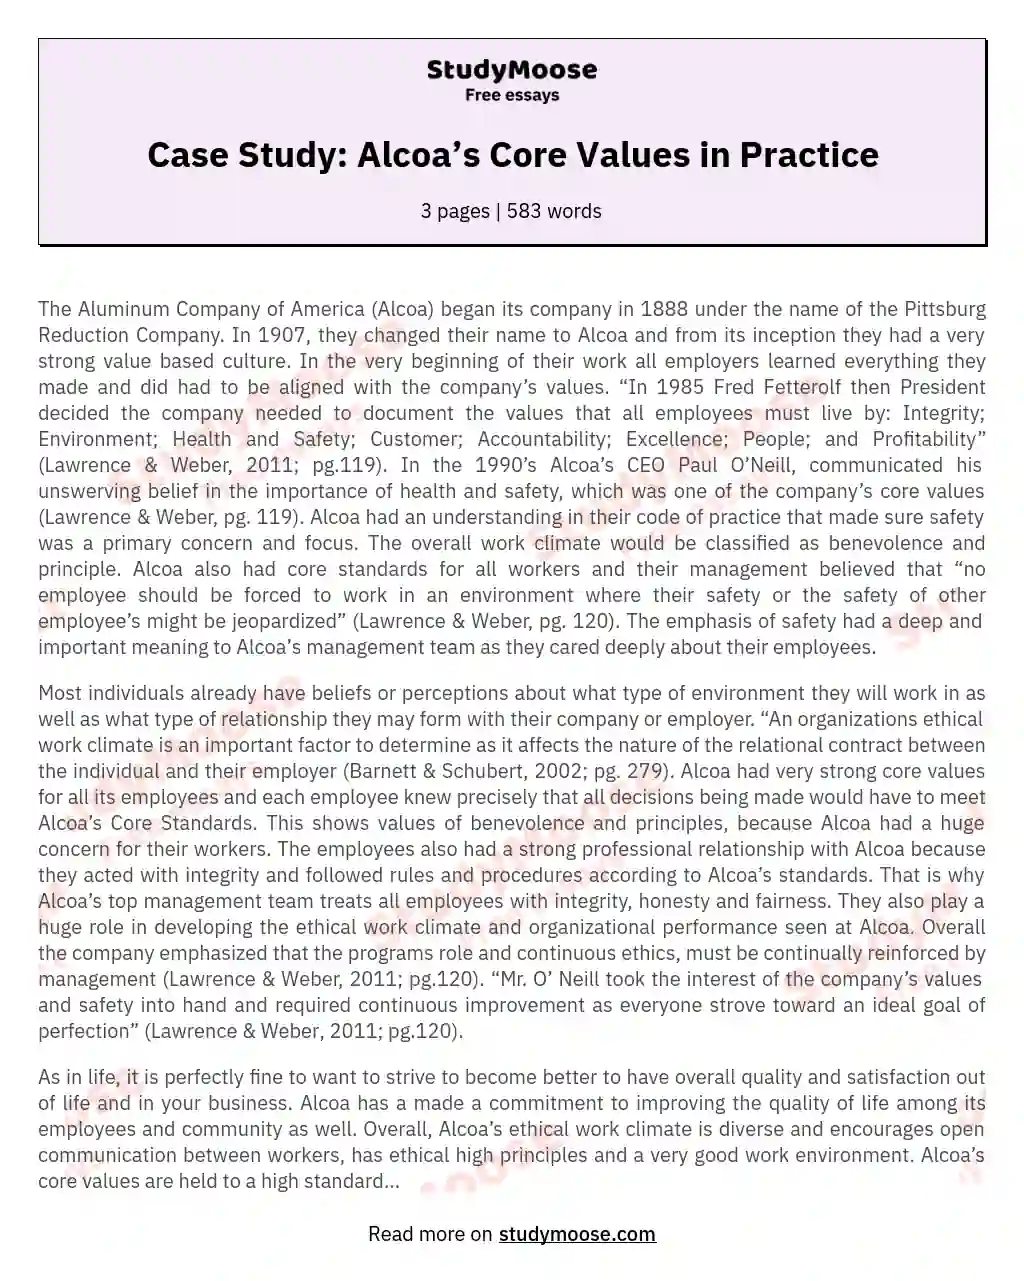 Case Study: Alcoa’s Core Values in Practice essay